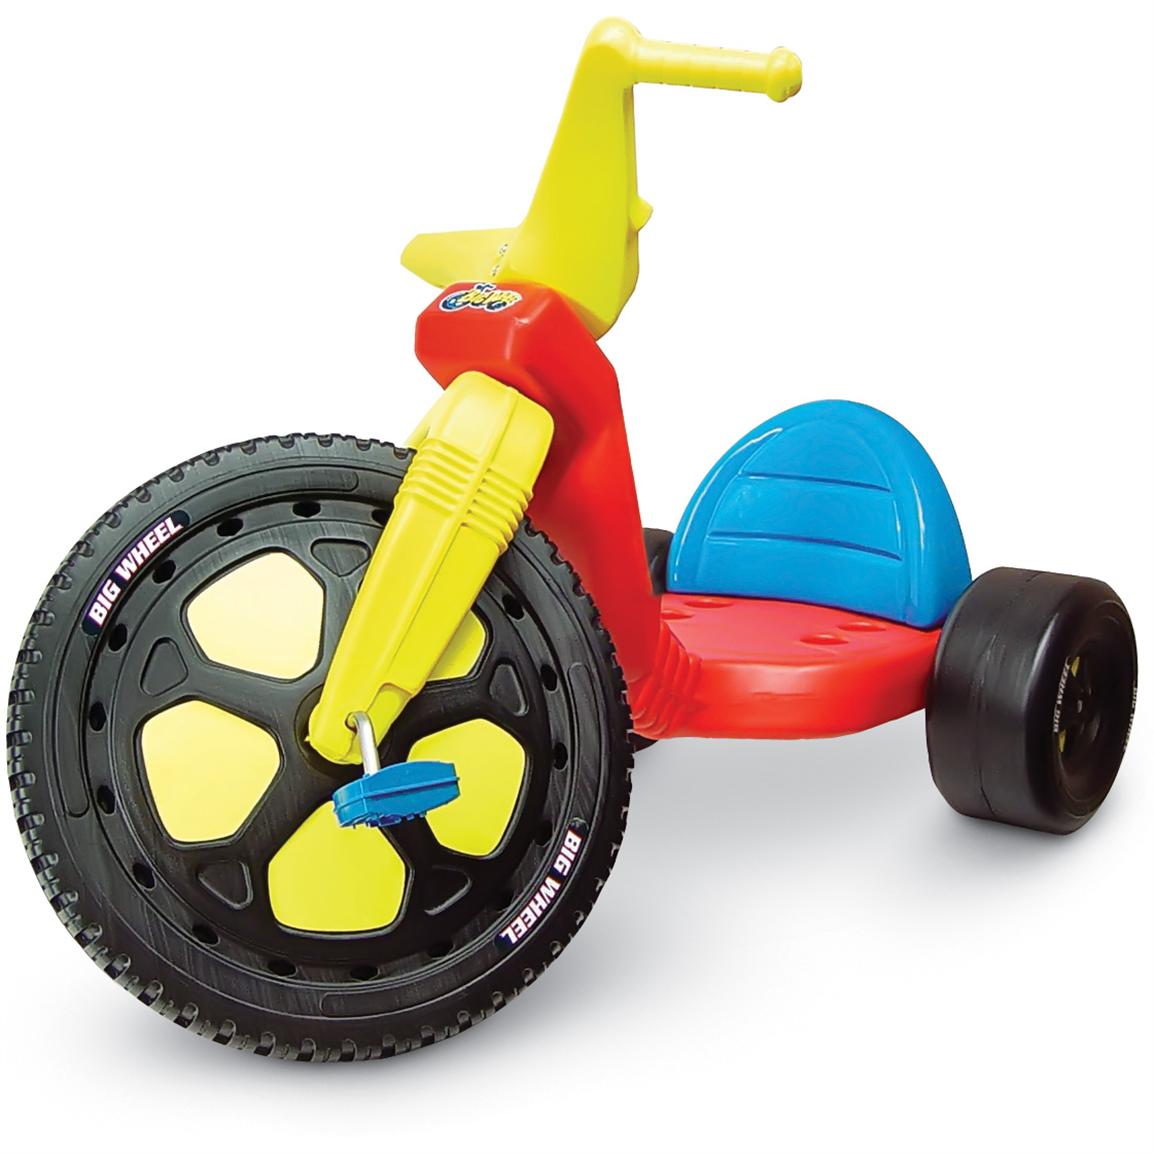 The Original Big Wheel Tricycle Red Yellow Blu